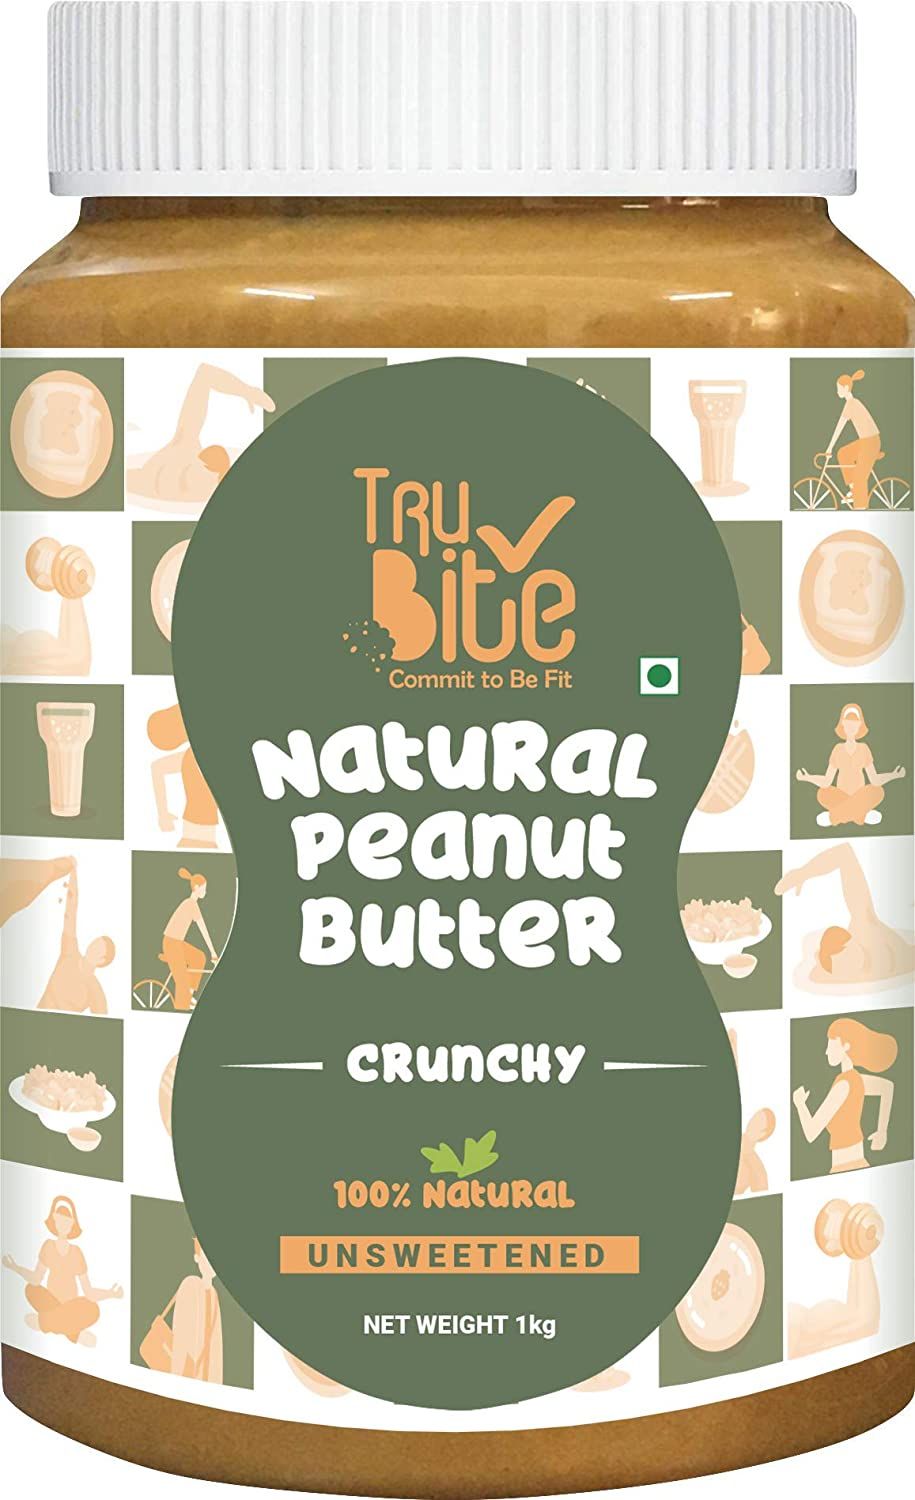 Trubite Natural Peanut Butter Crunchy Image